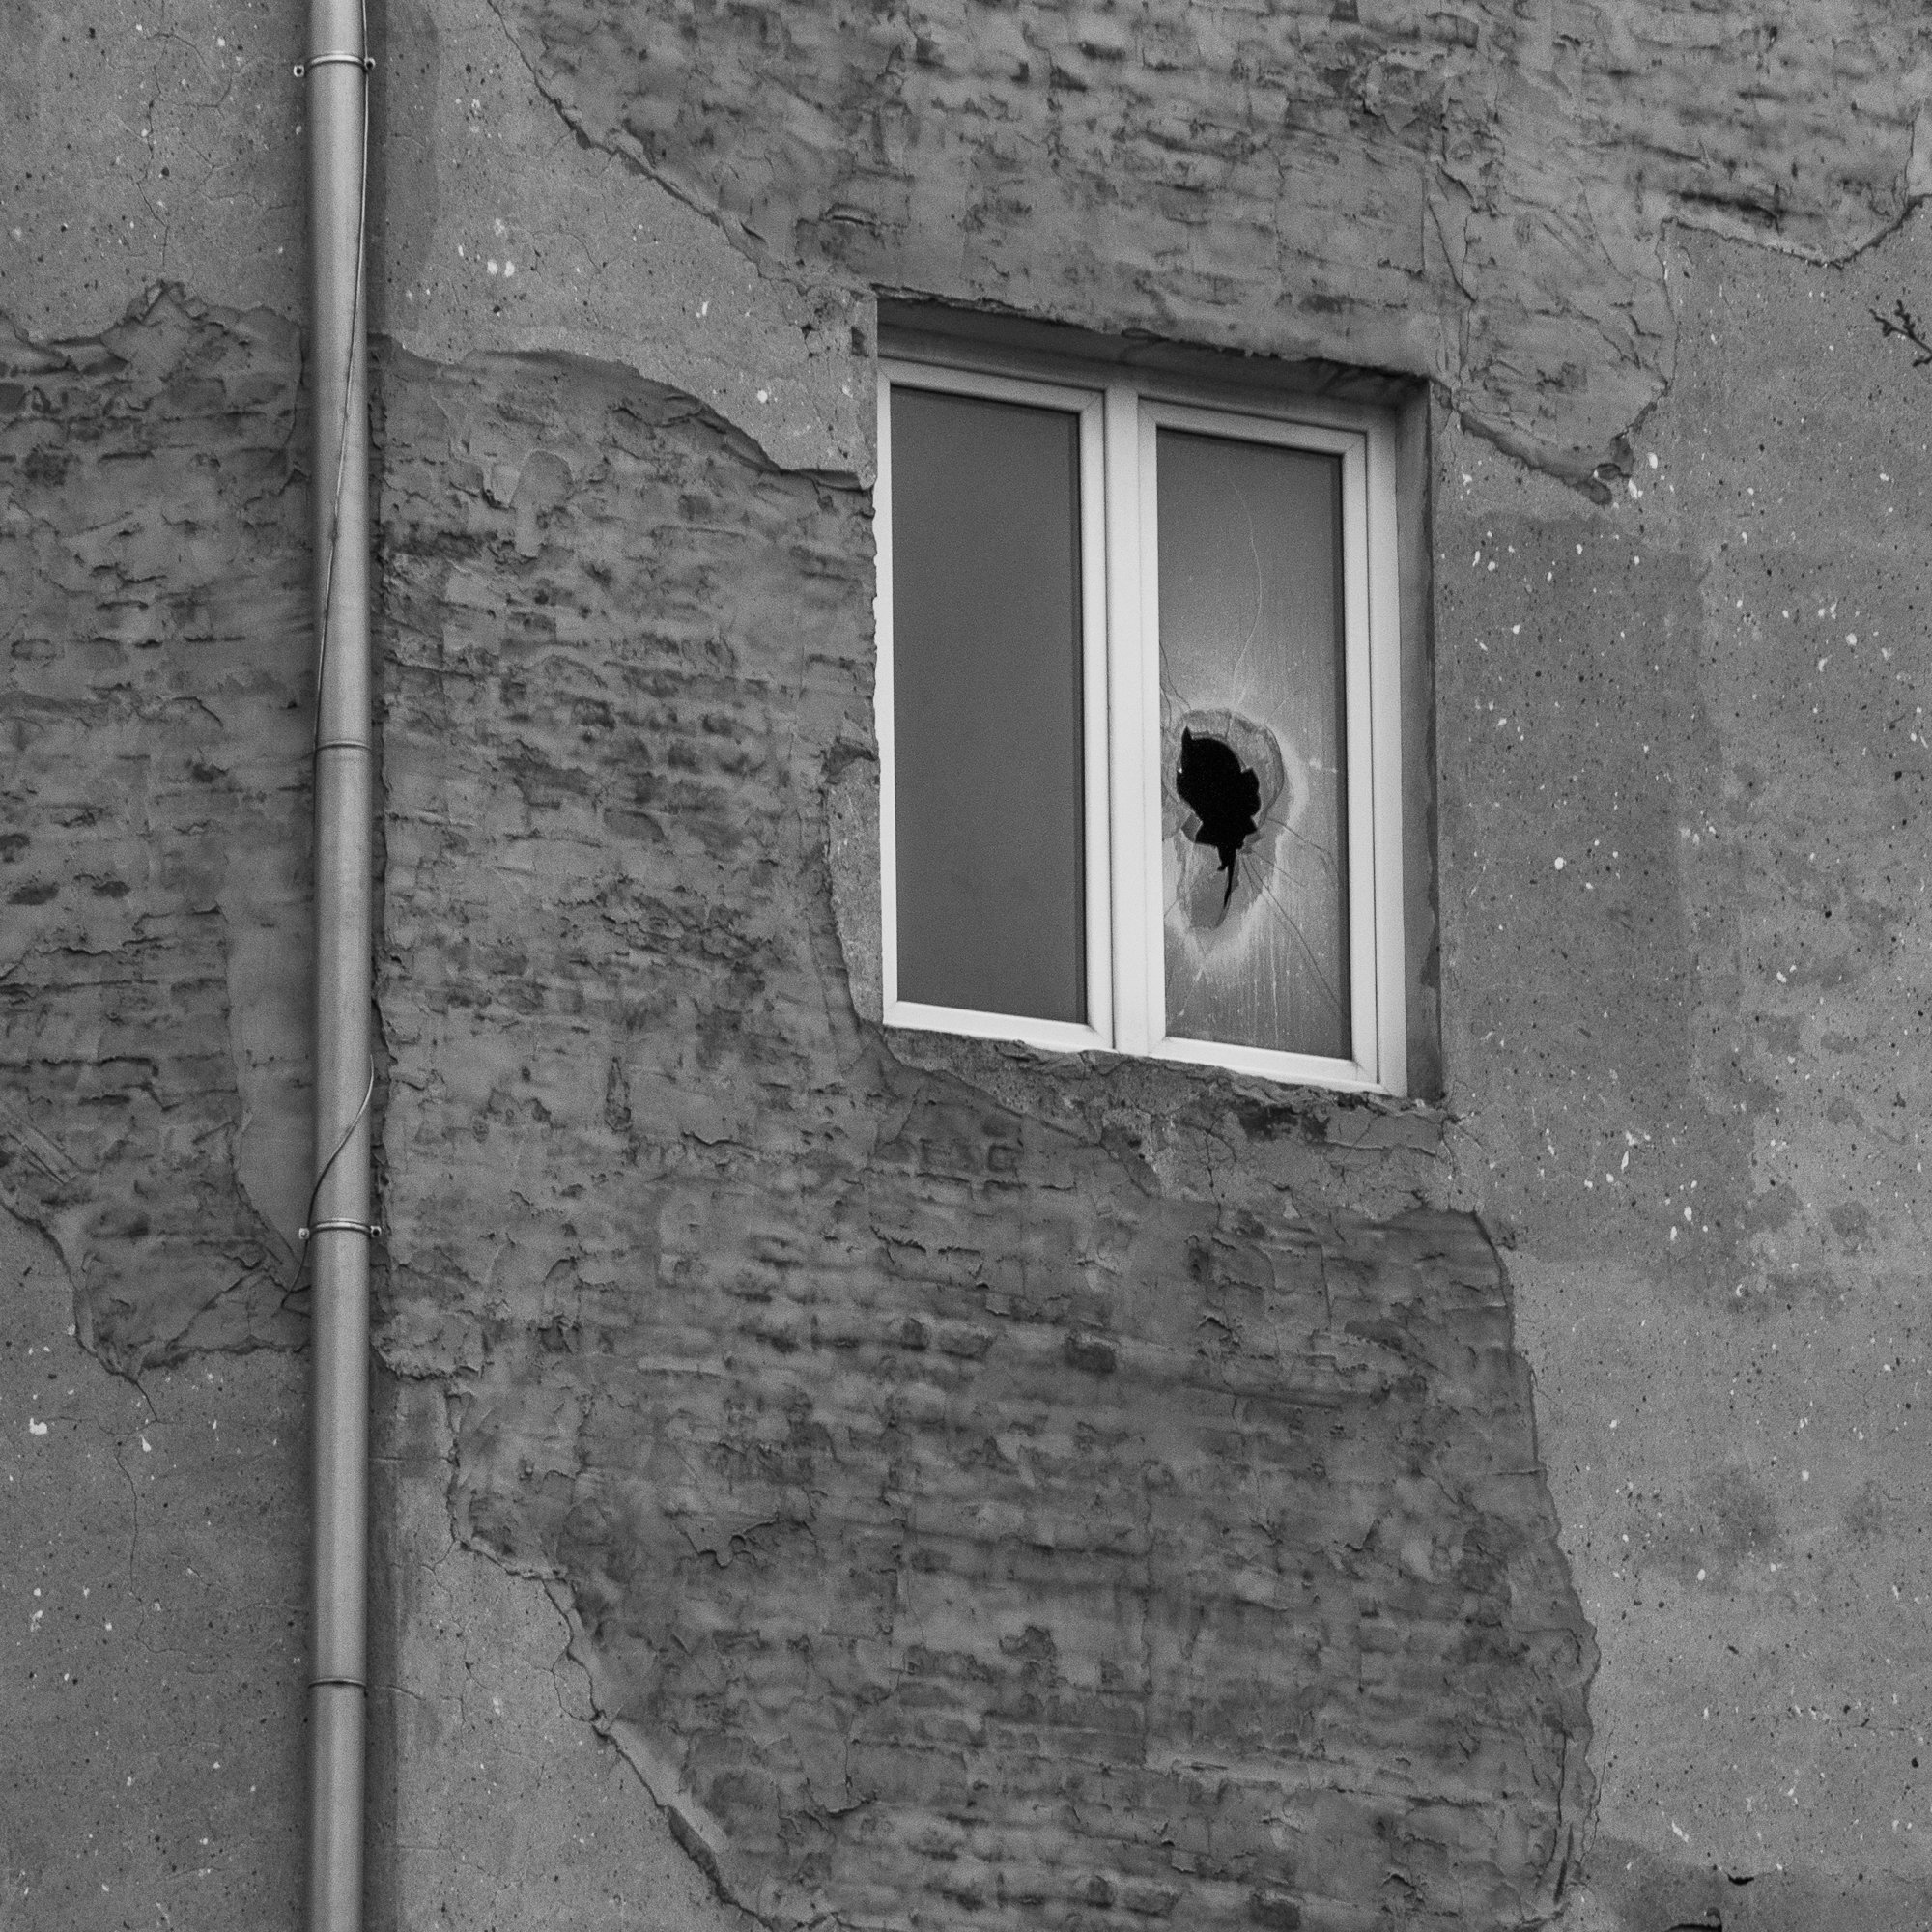 Adam Mazek Photography Warsaw 2018. Square. Broken window. Minimalism. Human's anti-perfection.